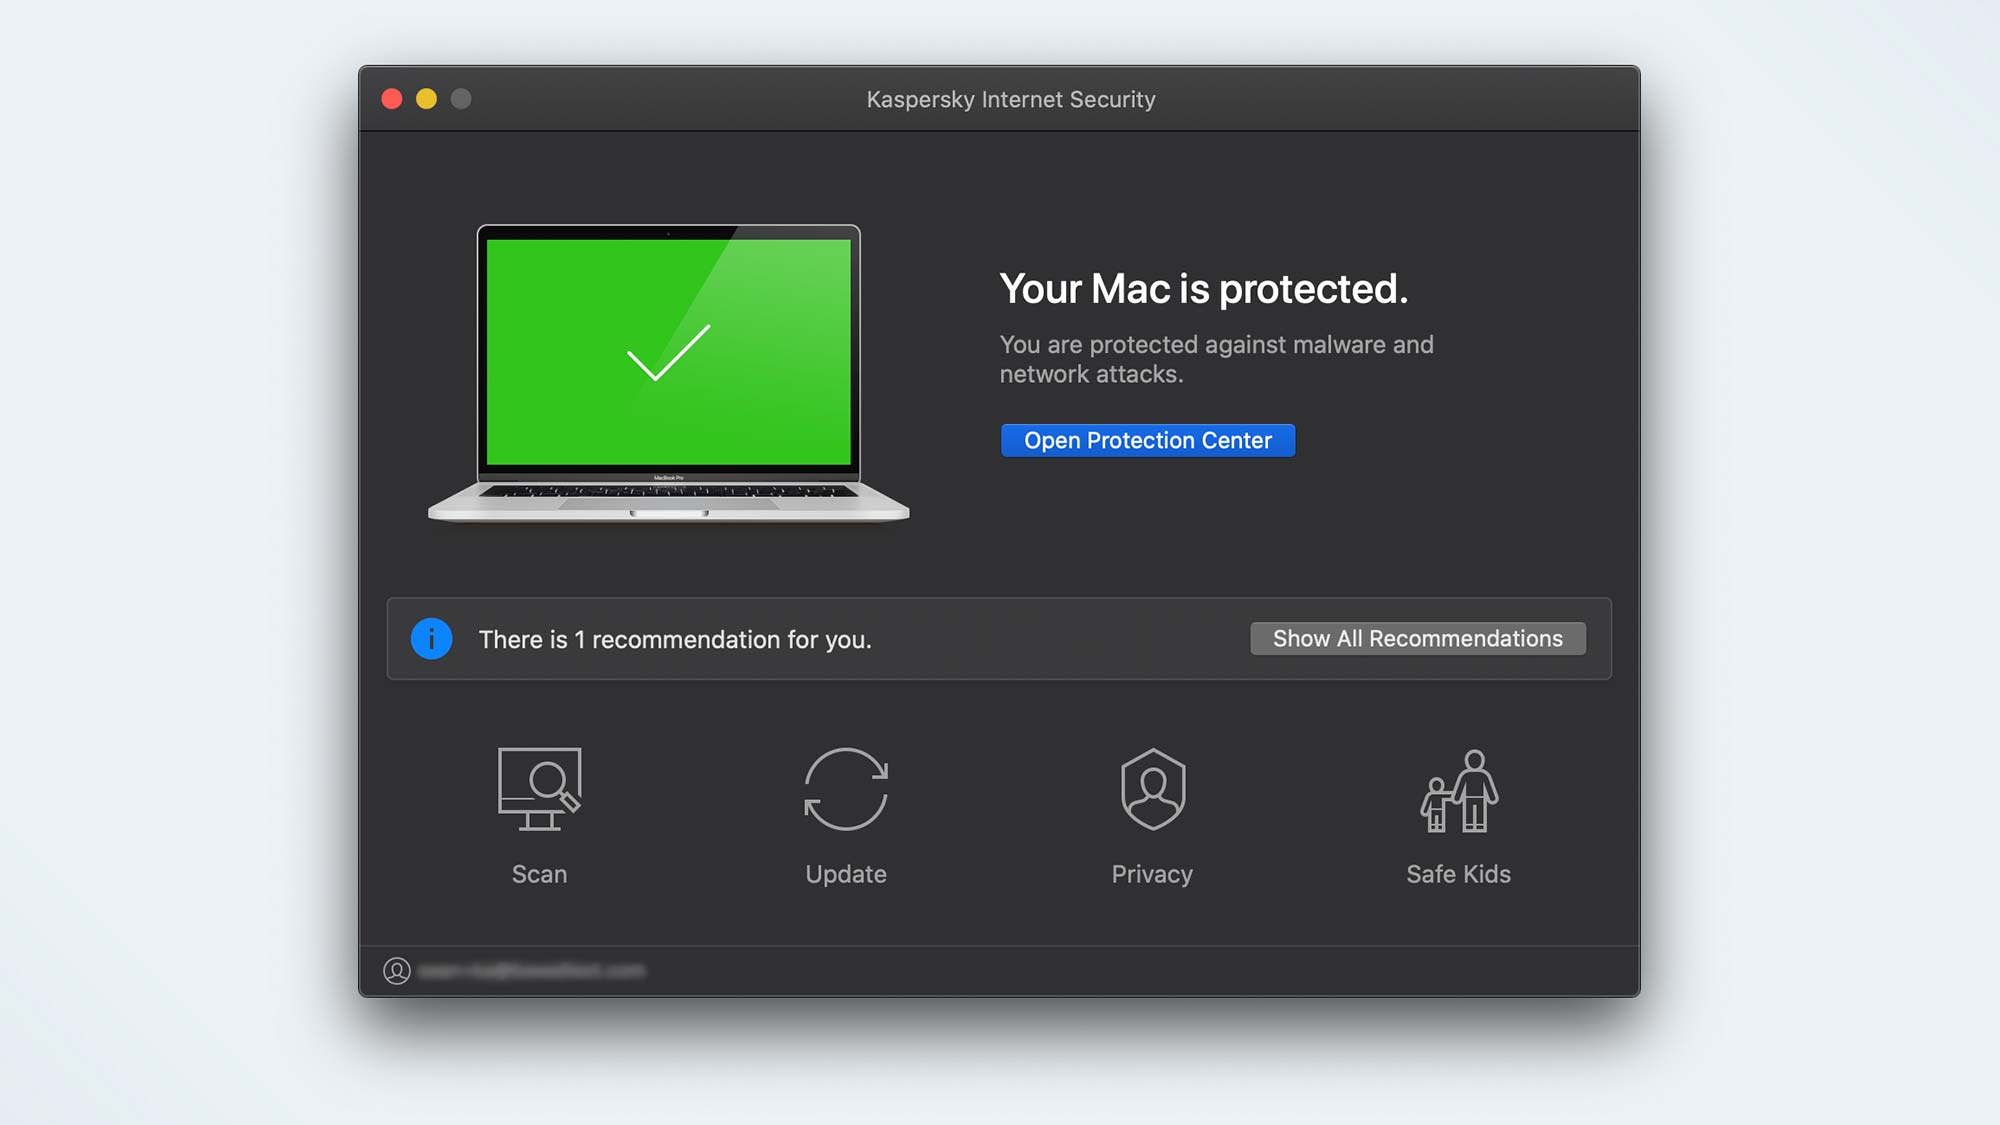 kaspersky total security download for mac